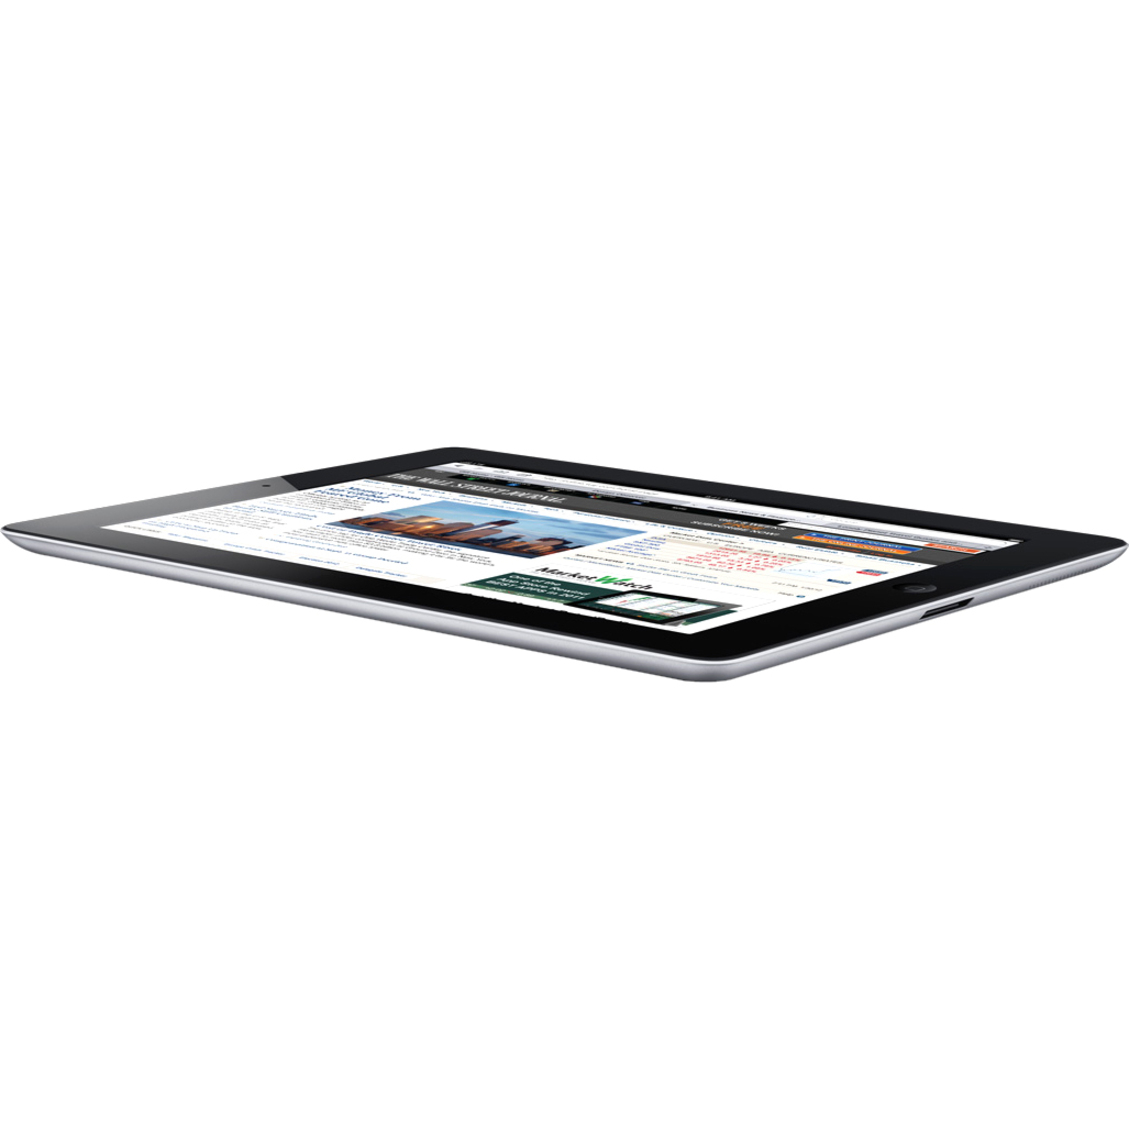 Apple iPad MD523LL/A Tablet, 9.7" QXGA, Apple A6X, 32 GB Storage, iOS 6, Black - image 4 of 6